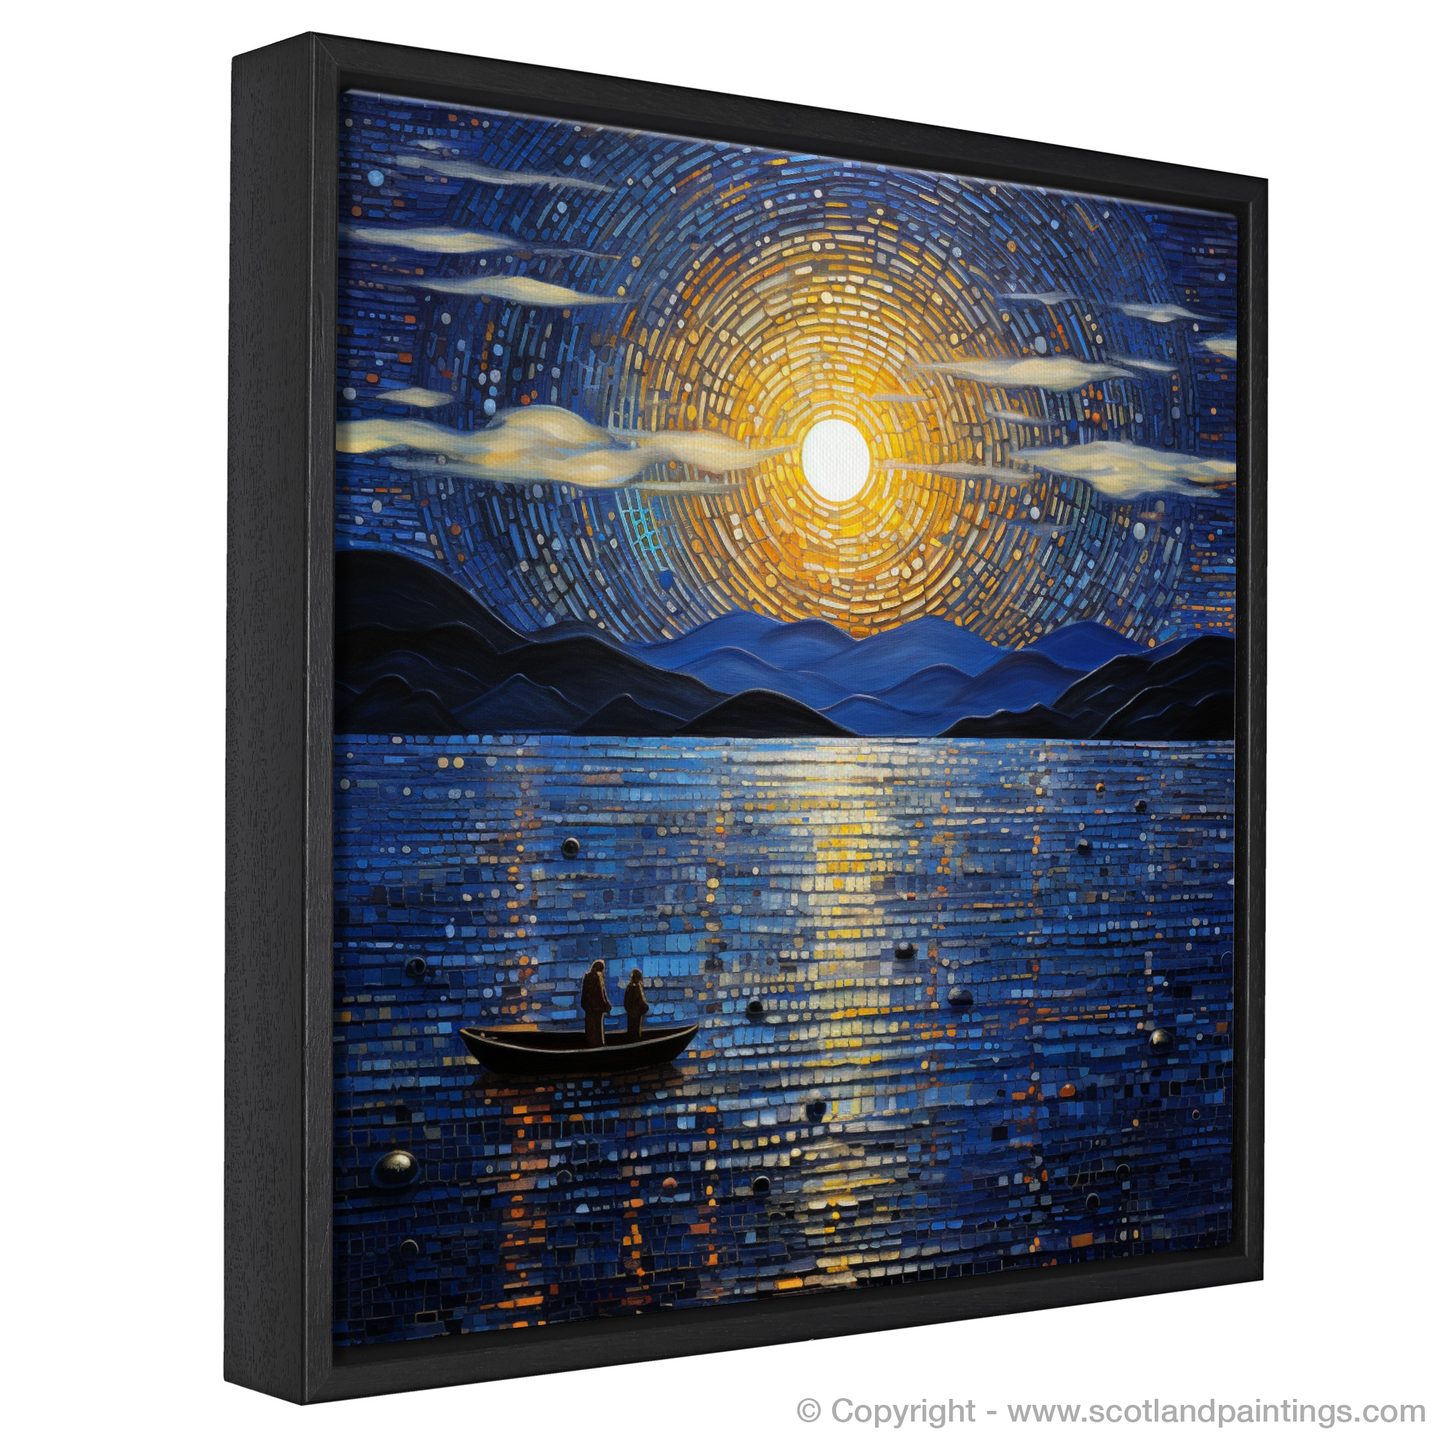 Painting and Art Print of Twilight reflections on Loch Lomond entitled "Twilight Serenade on Loch Lomond".